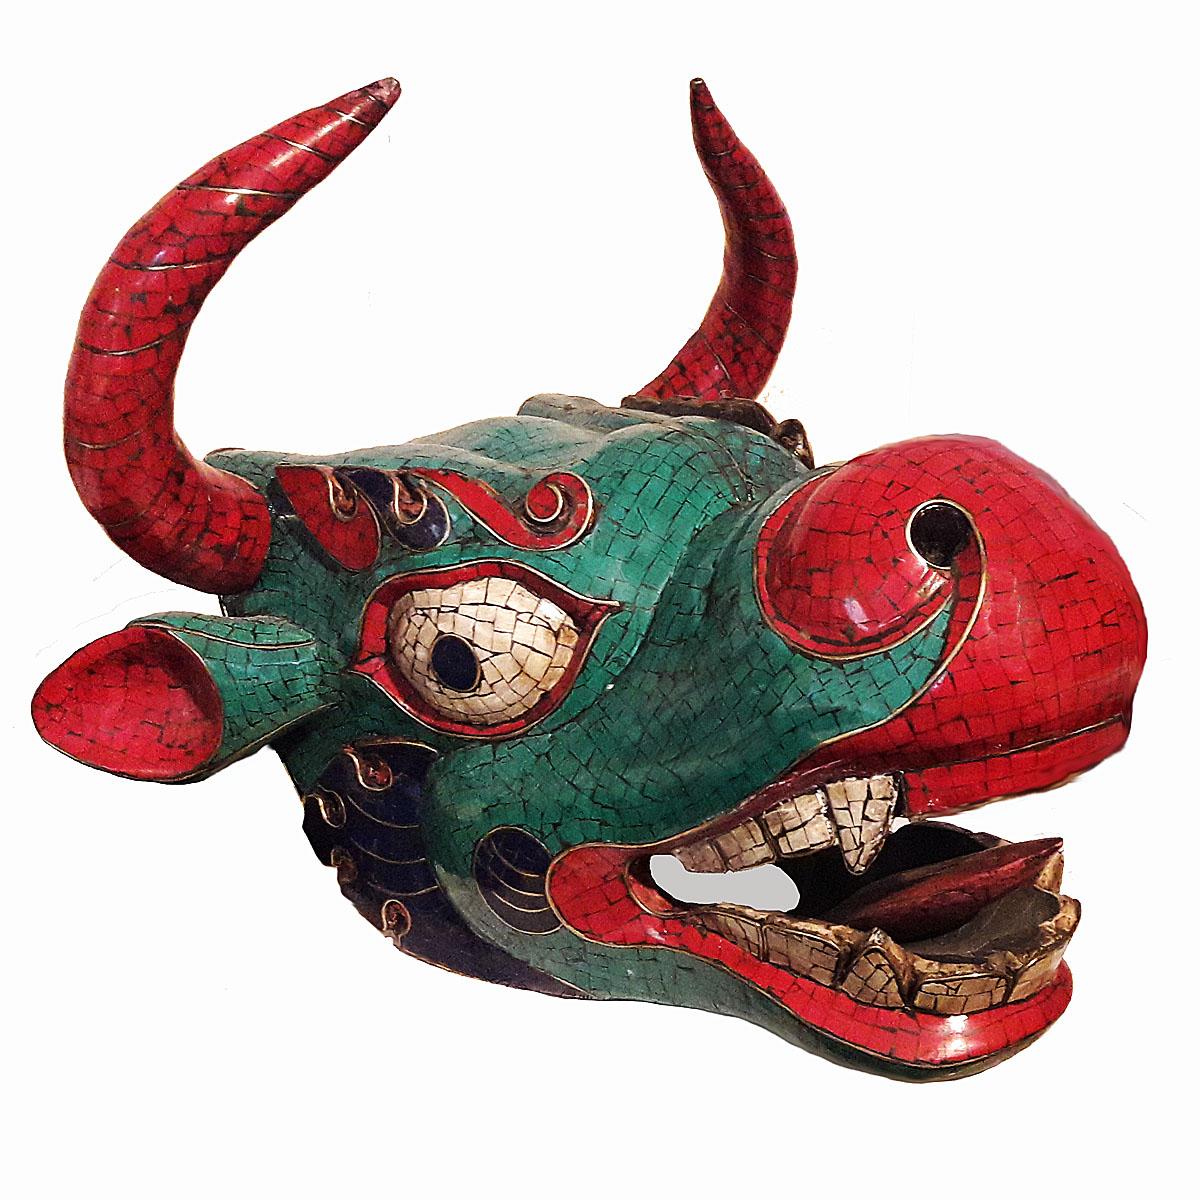 Ceremonial Ox Mask from Bhutan